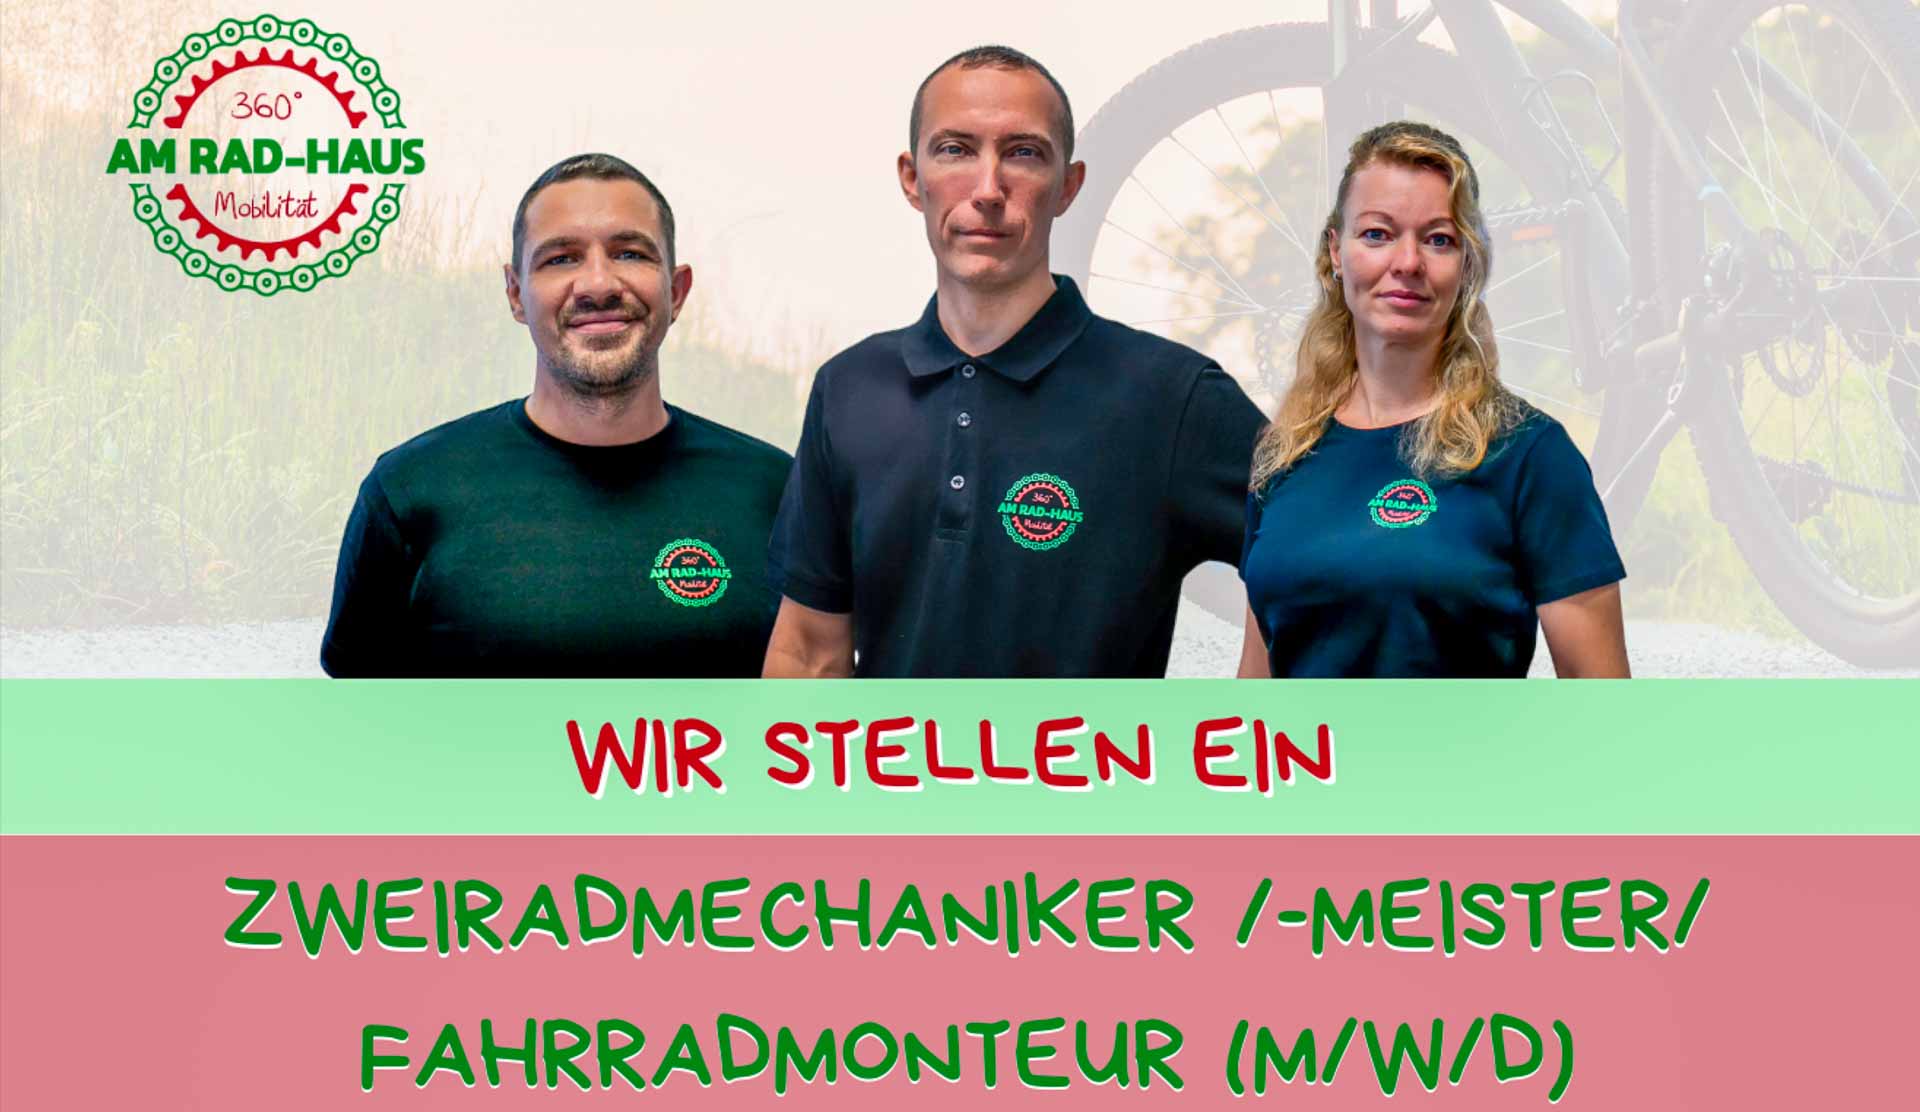 Zweiradmechaniker /-meister/ Fahrradmonteur (m/w/d) in Bernau „Am Rad-Haus GmbH"